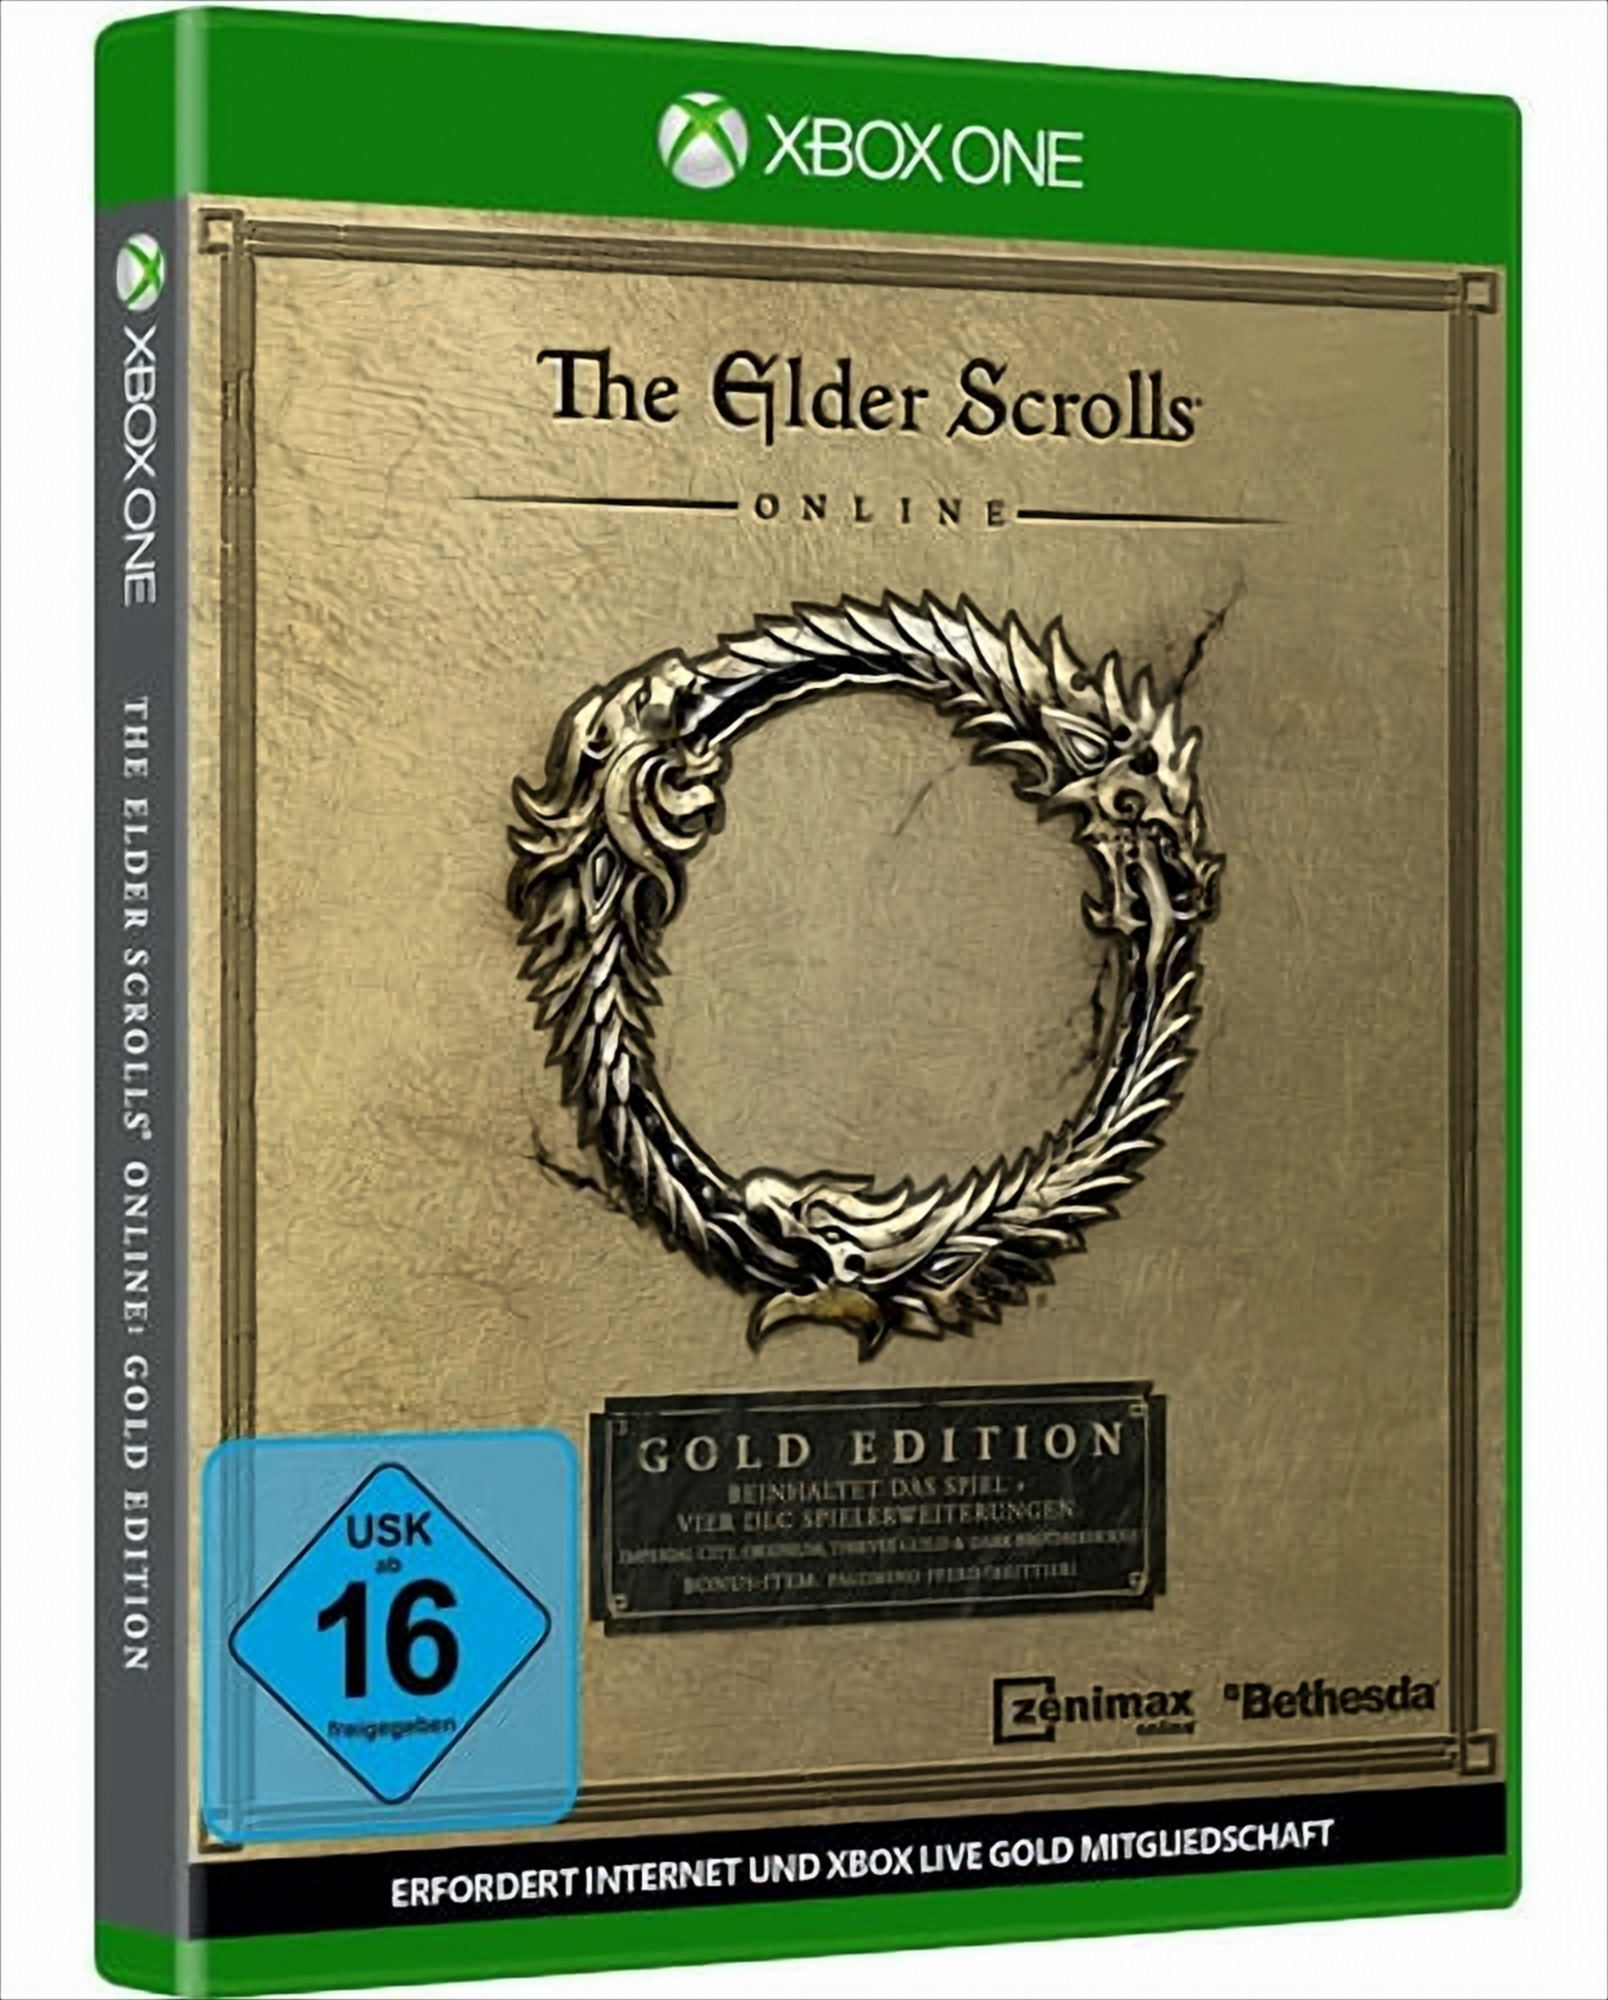 The Elder Scrolls Online Edition - Gold [Xbox One] 